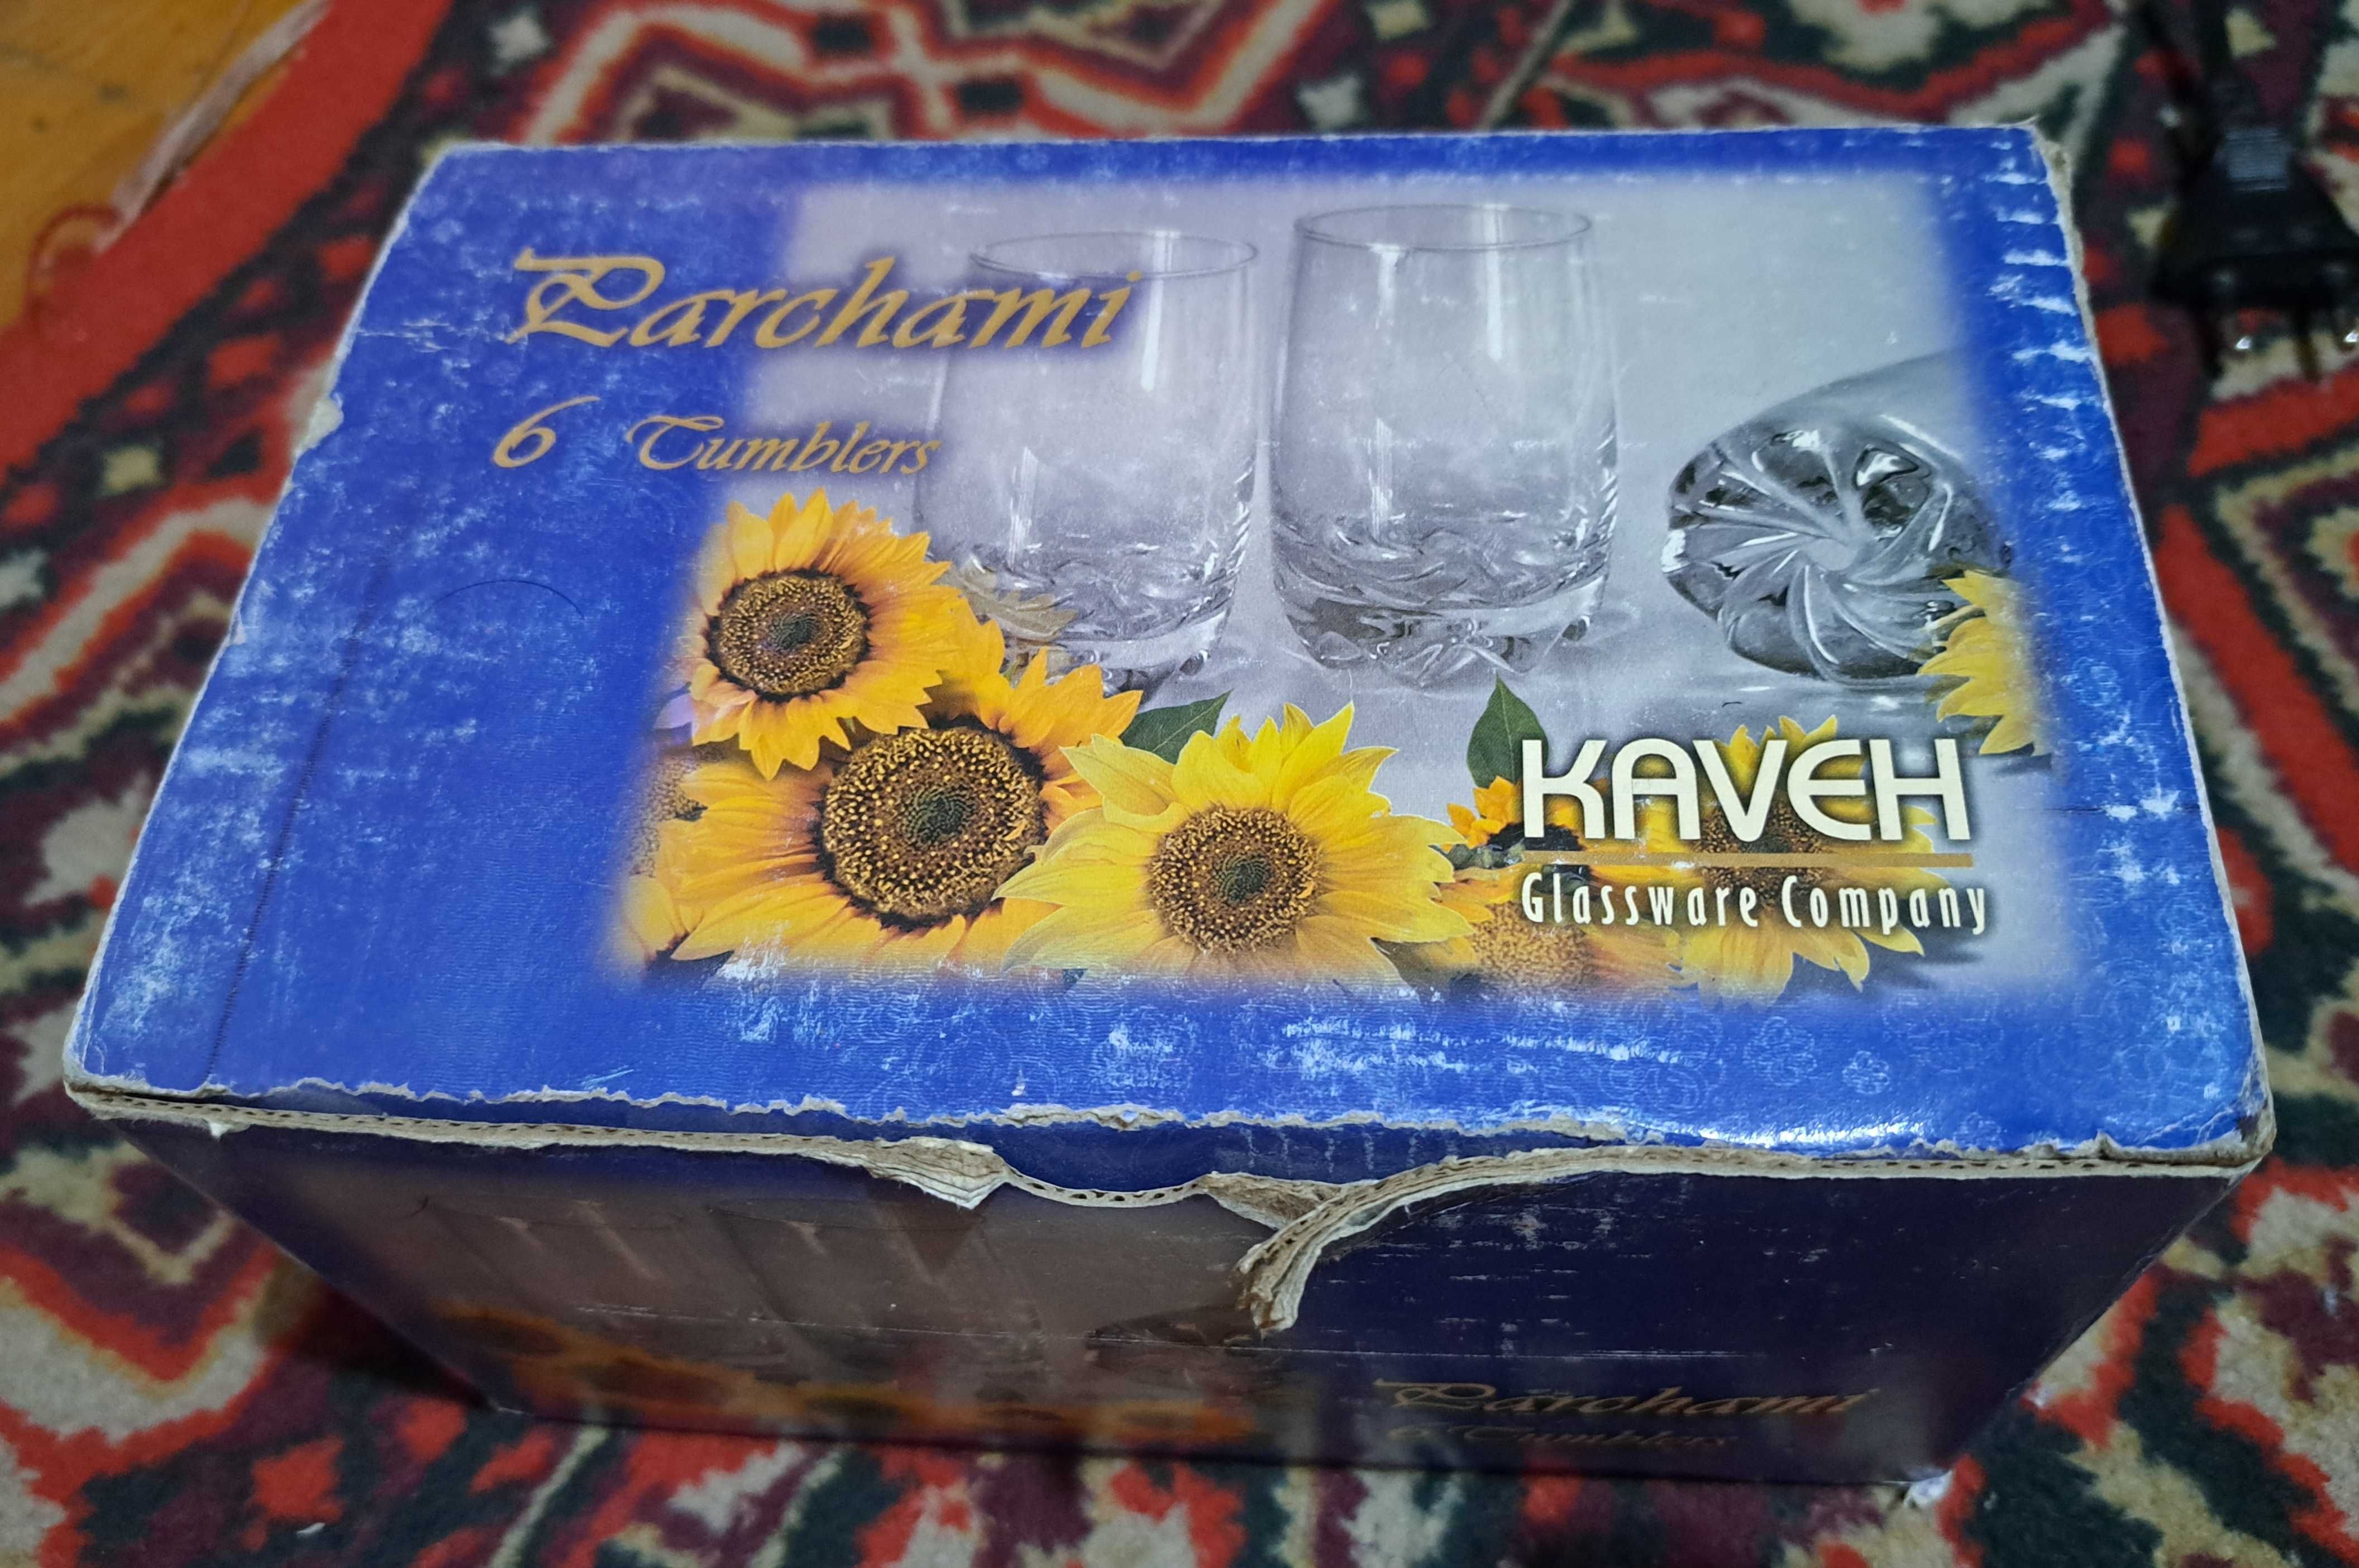 Рюмки набор Parchami 6 шт., Kaveh company, стекло